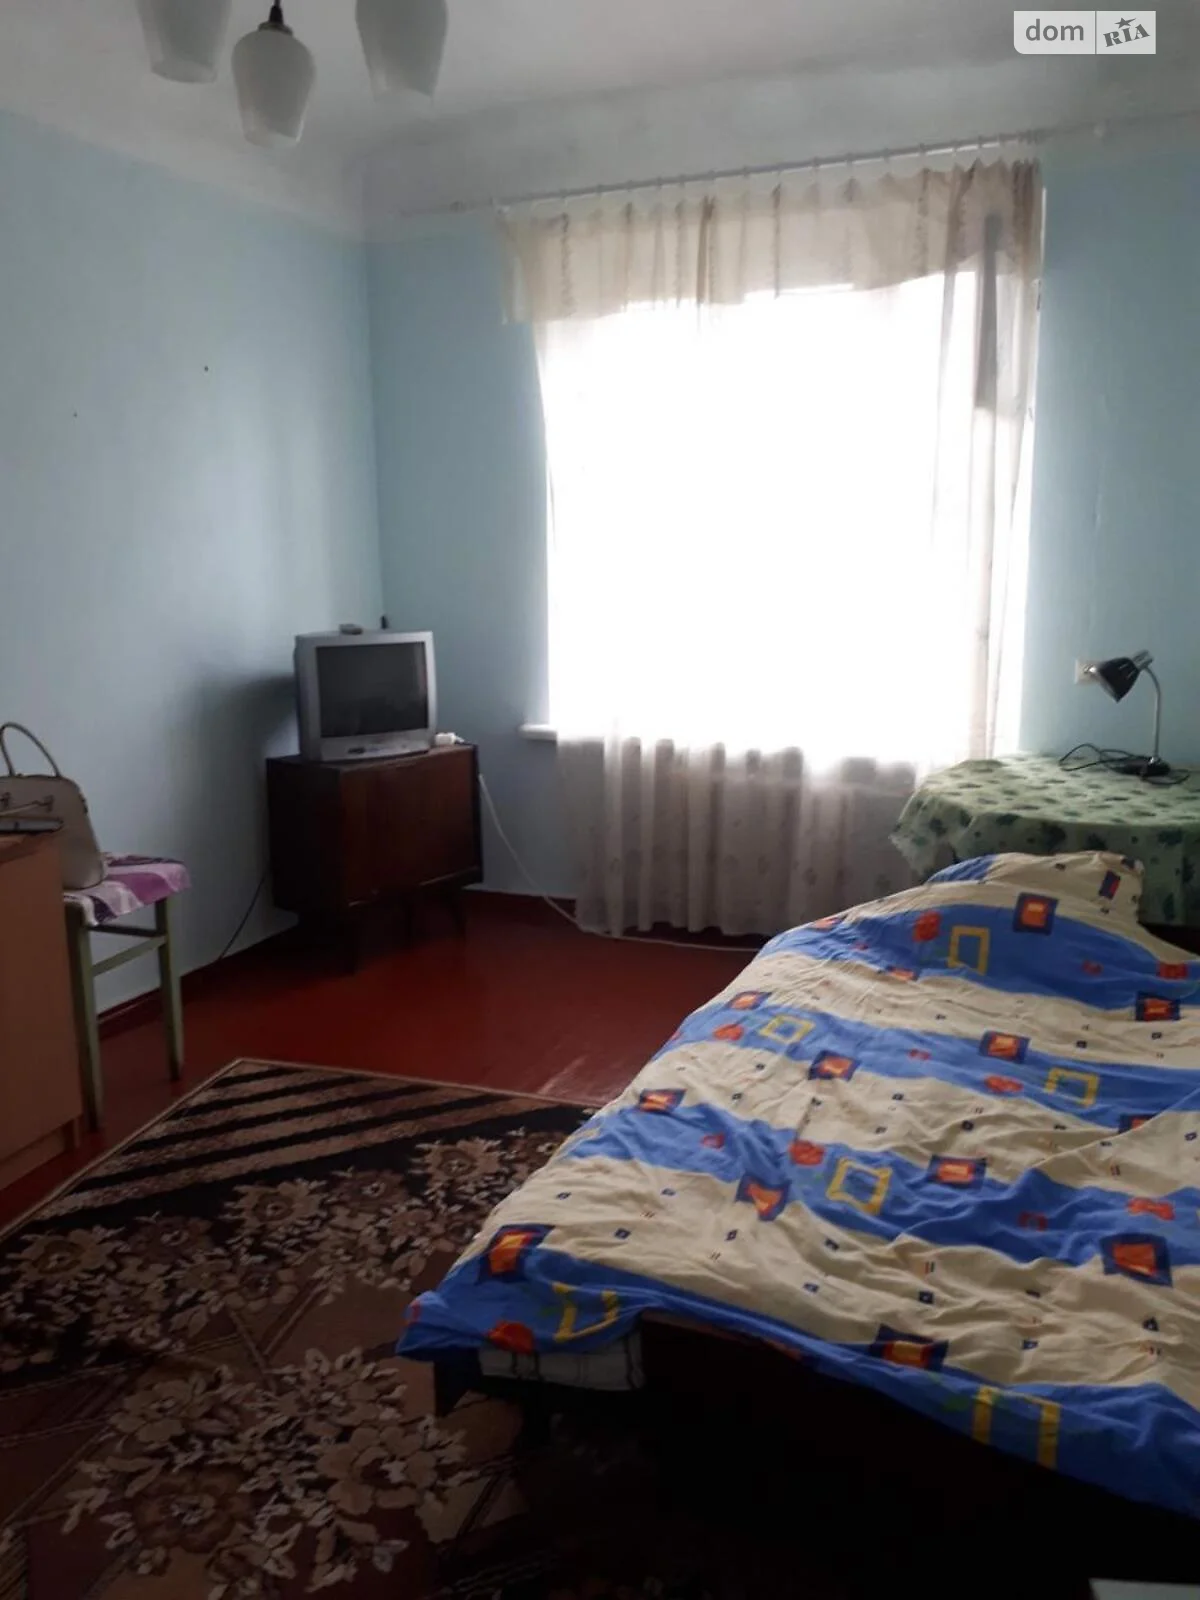 Продается комната 41 кв. м в Харькове - фото 2